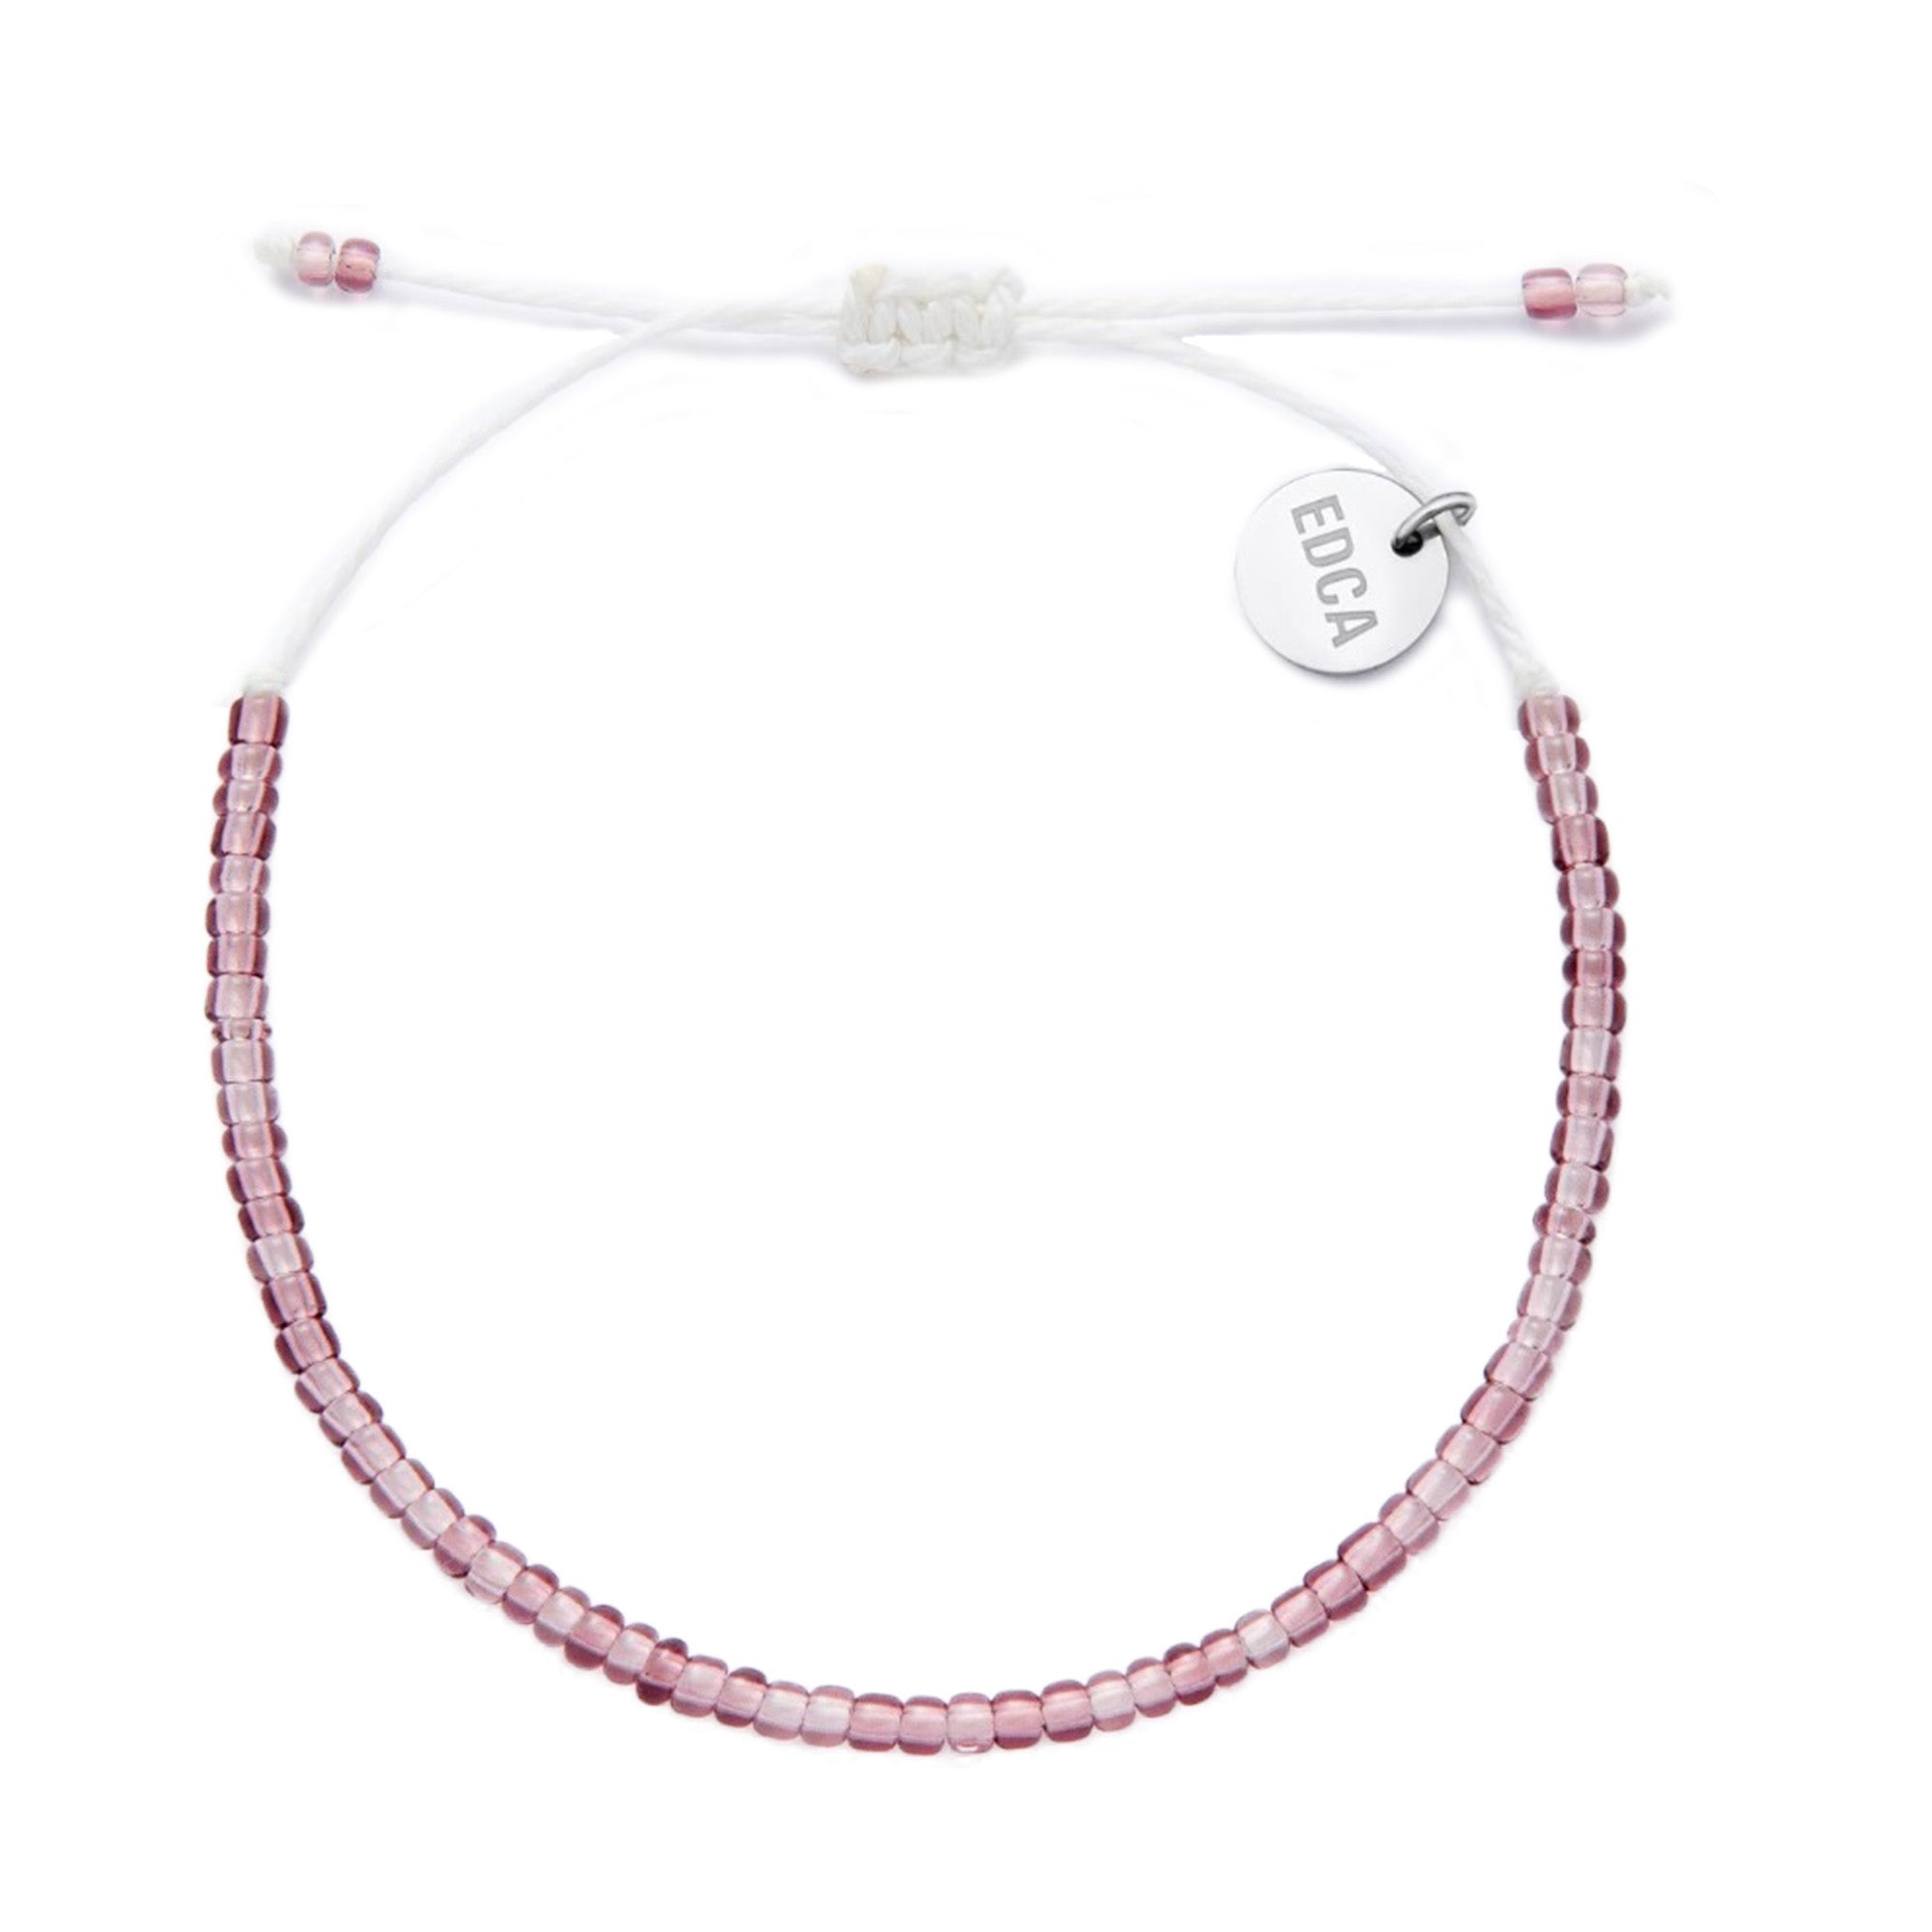 Pink bracelet with "EDCA" charm